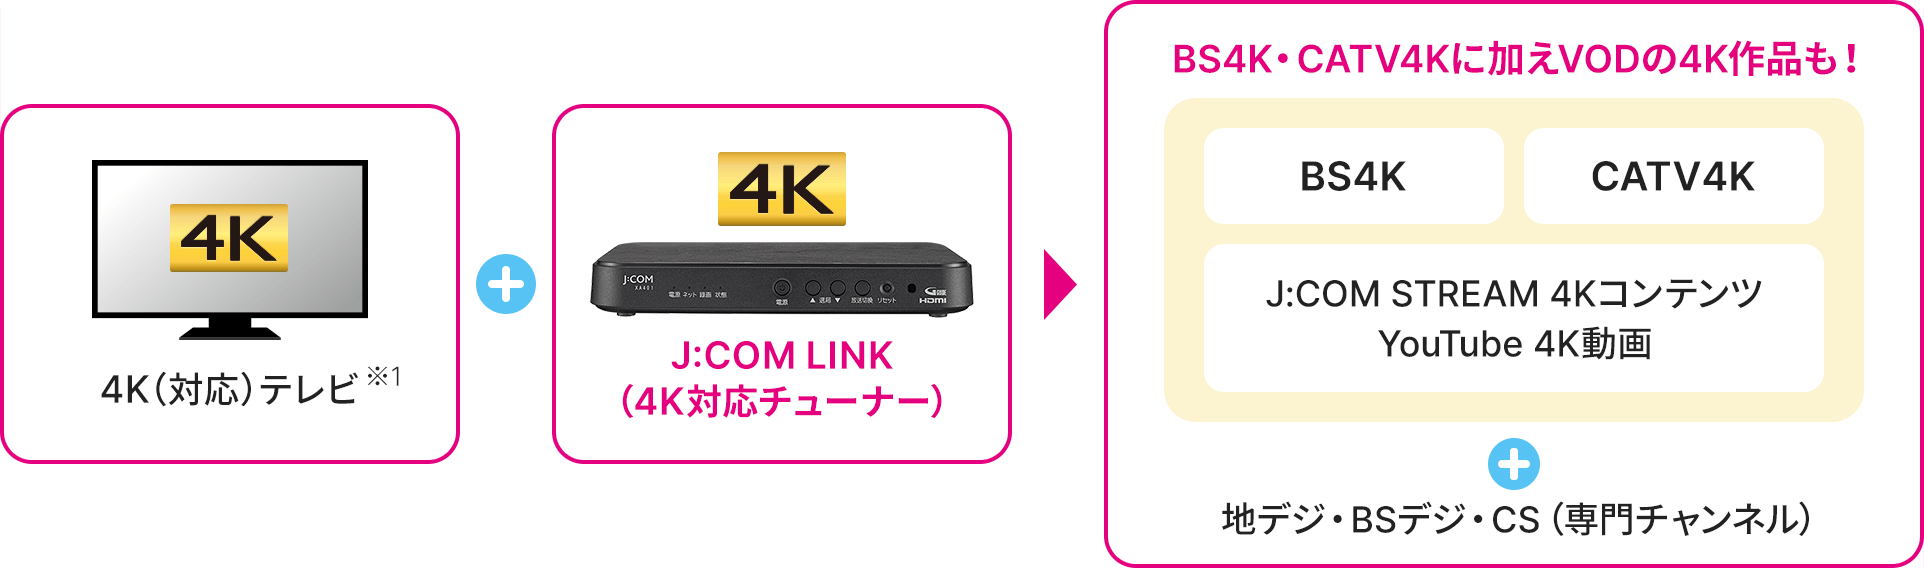 4K（対応）テレビ＋J:COM LINK（4K対応チューナー）→BS4K・CATV4Kに加えVODの4K作品も